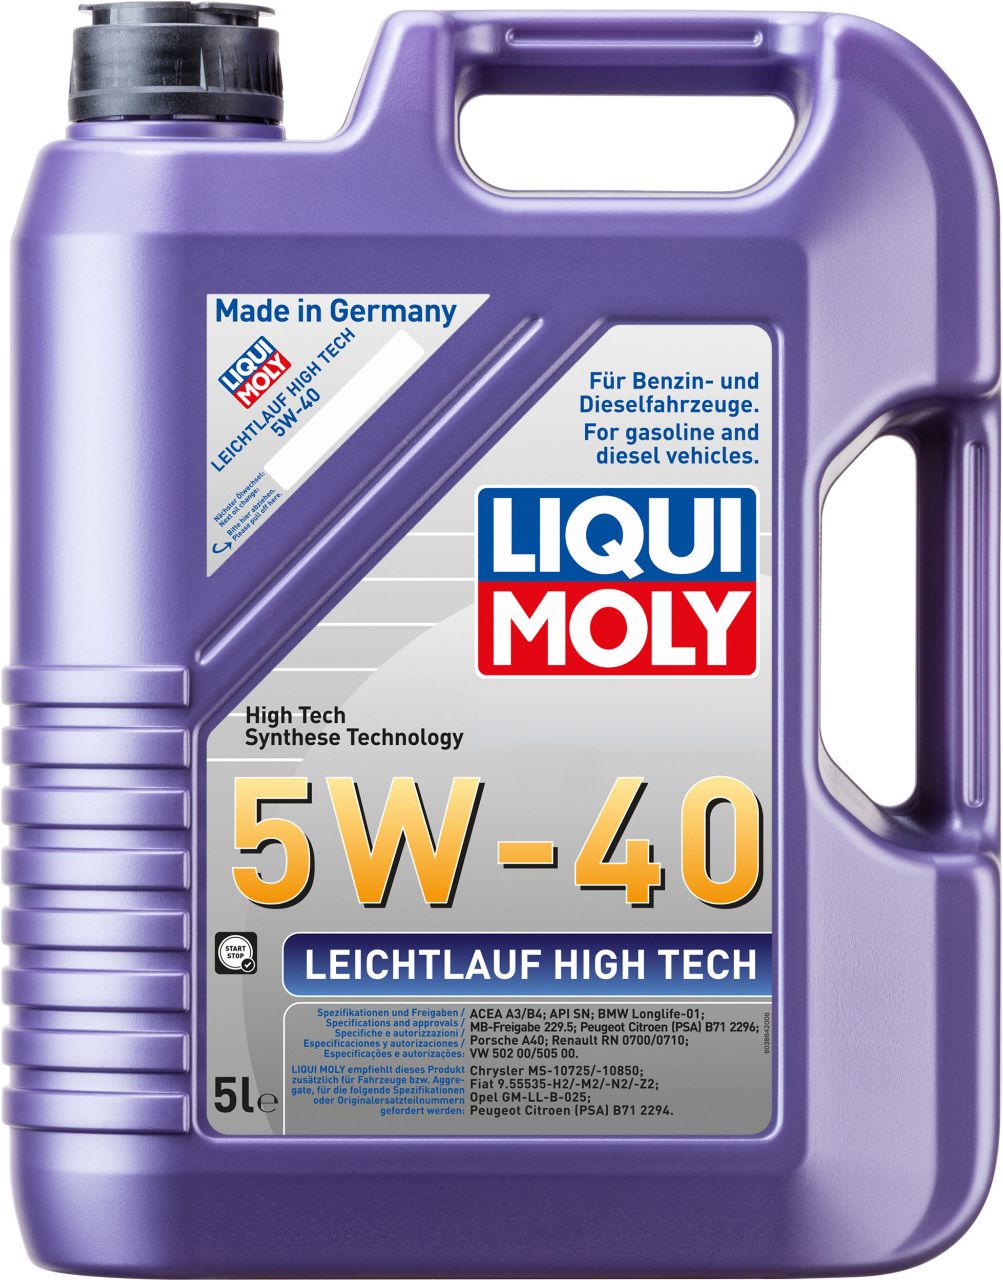 Liqui Moly Motoröl Leichtlauf High Tech 5W-40 5 L von Liqui Moly